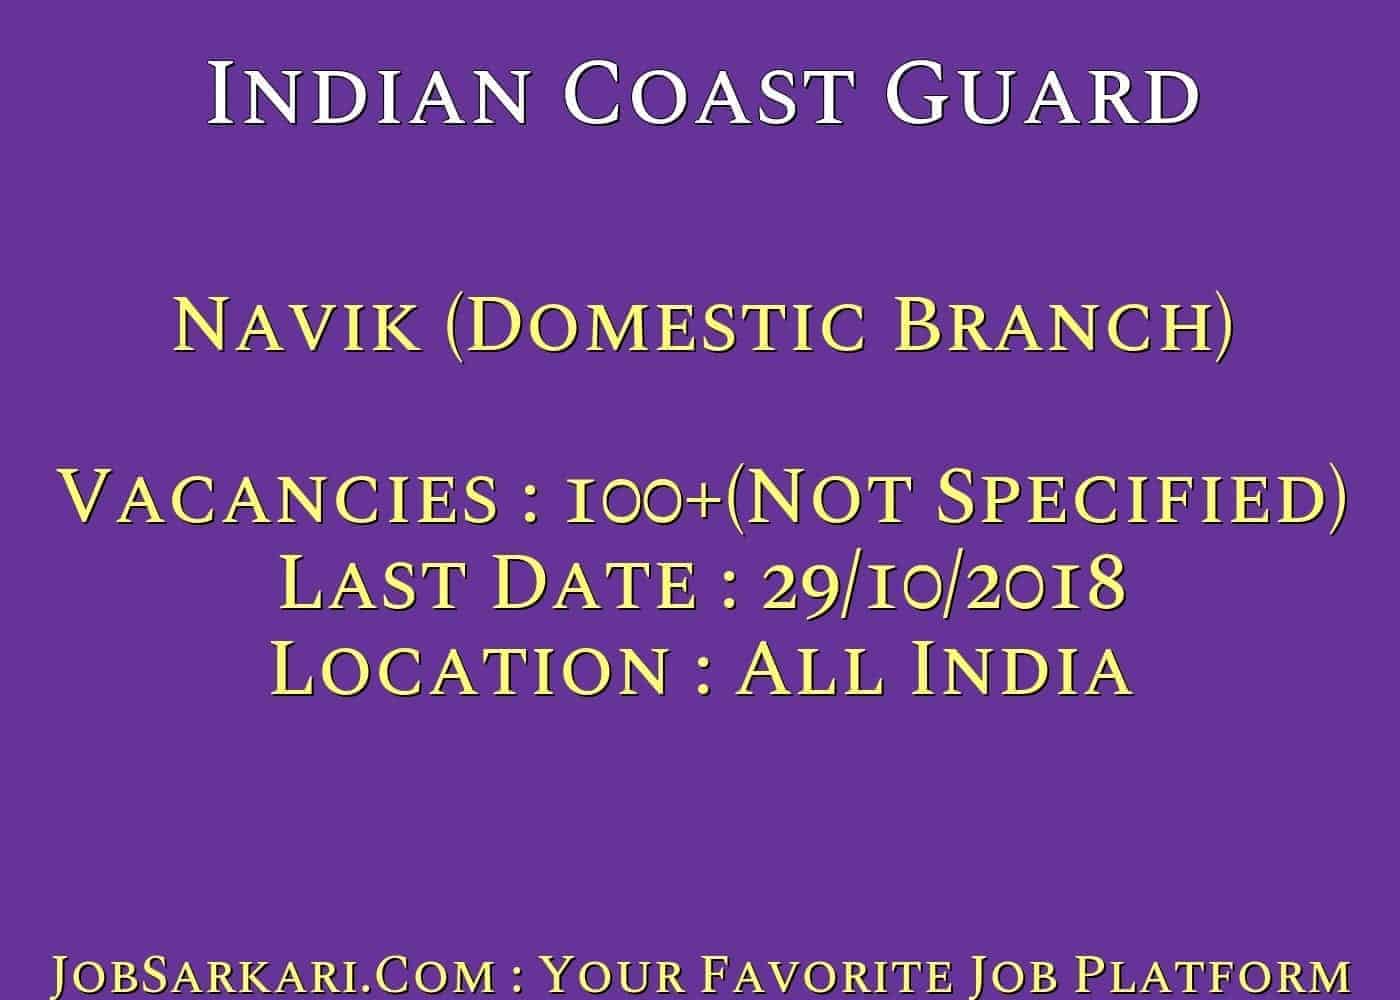 Indian Coast Guard Recruitment 2019 For Navik (Domestic Branch) Govt Job